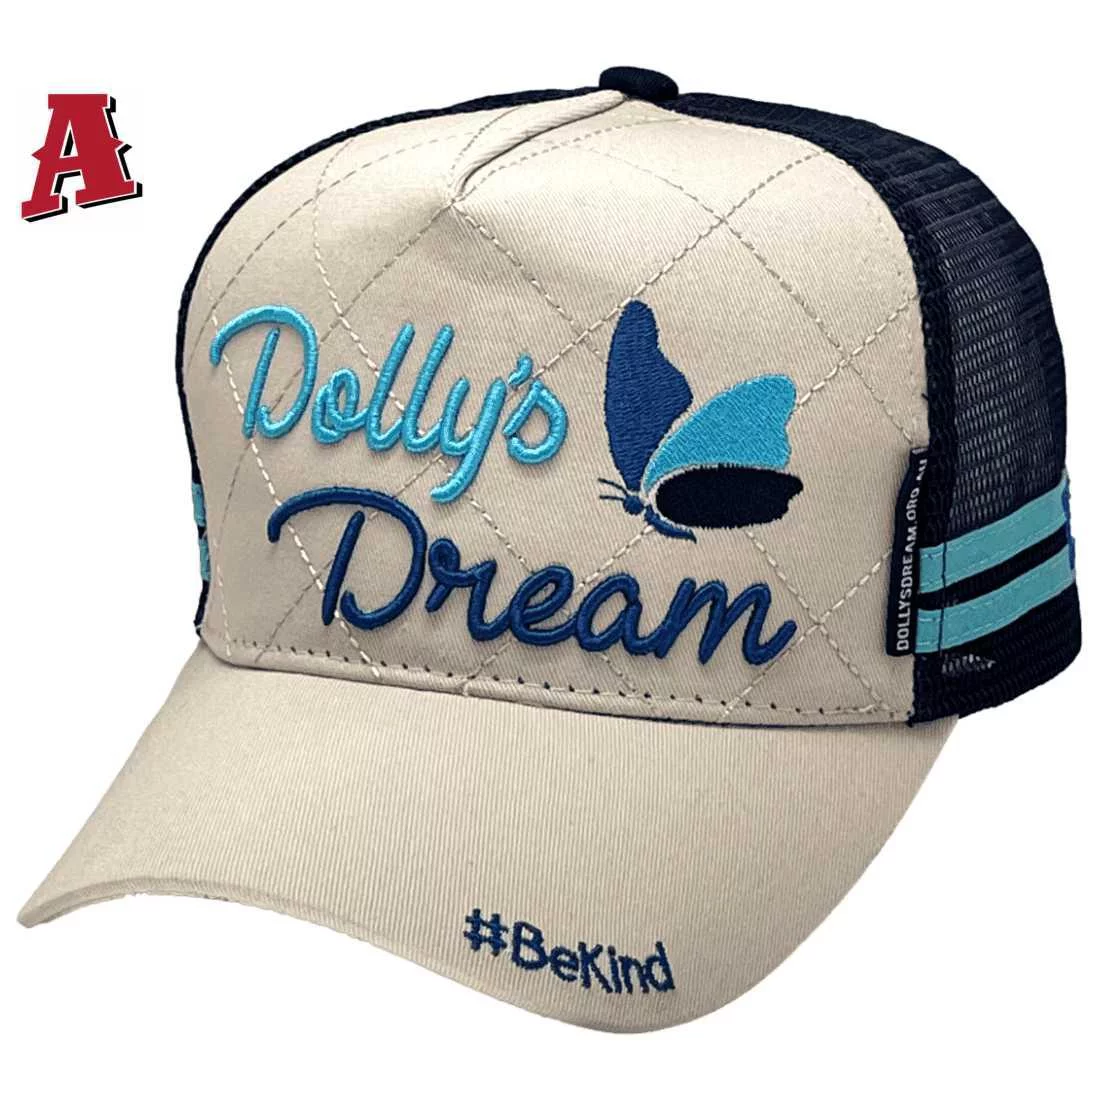 Dolly's Dream Foundation #BeKind Power Aussie Trucker Hat LP with Australian Head Fit Crown and 2 Side Stripes Light Khaki Navy Aqua